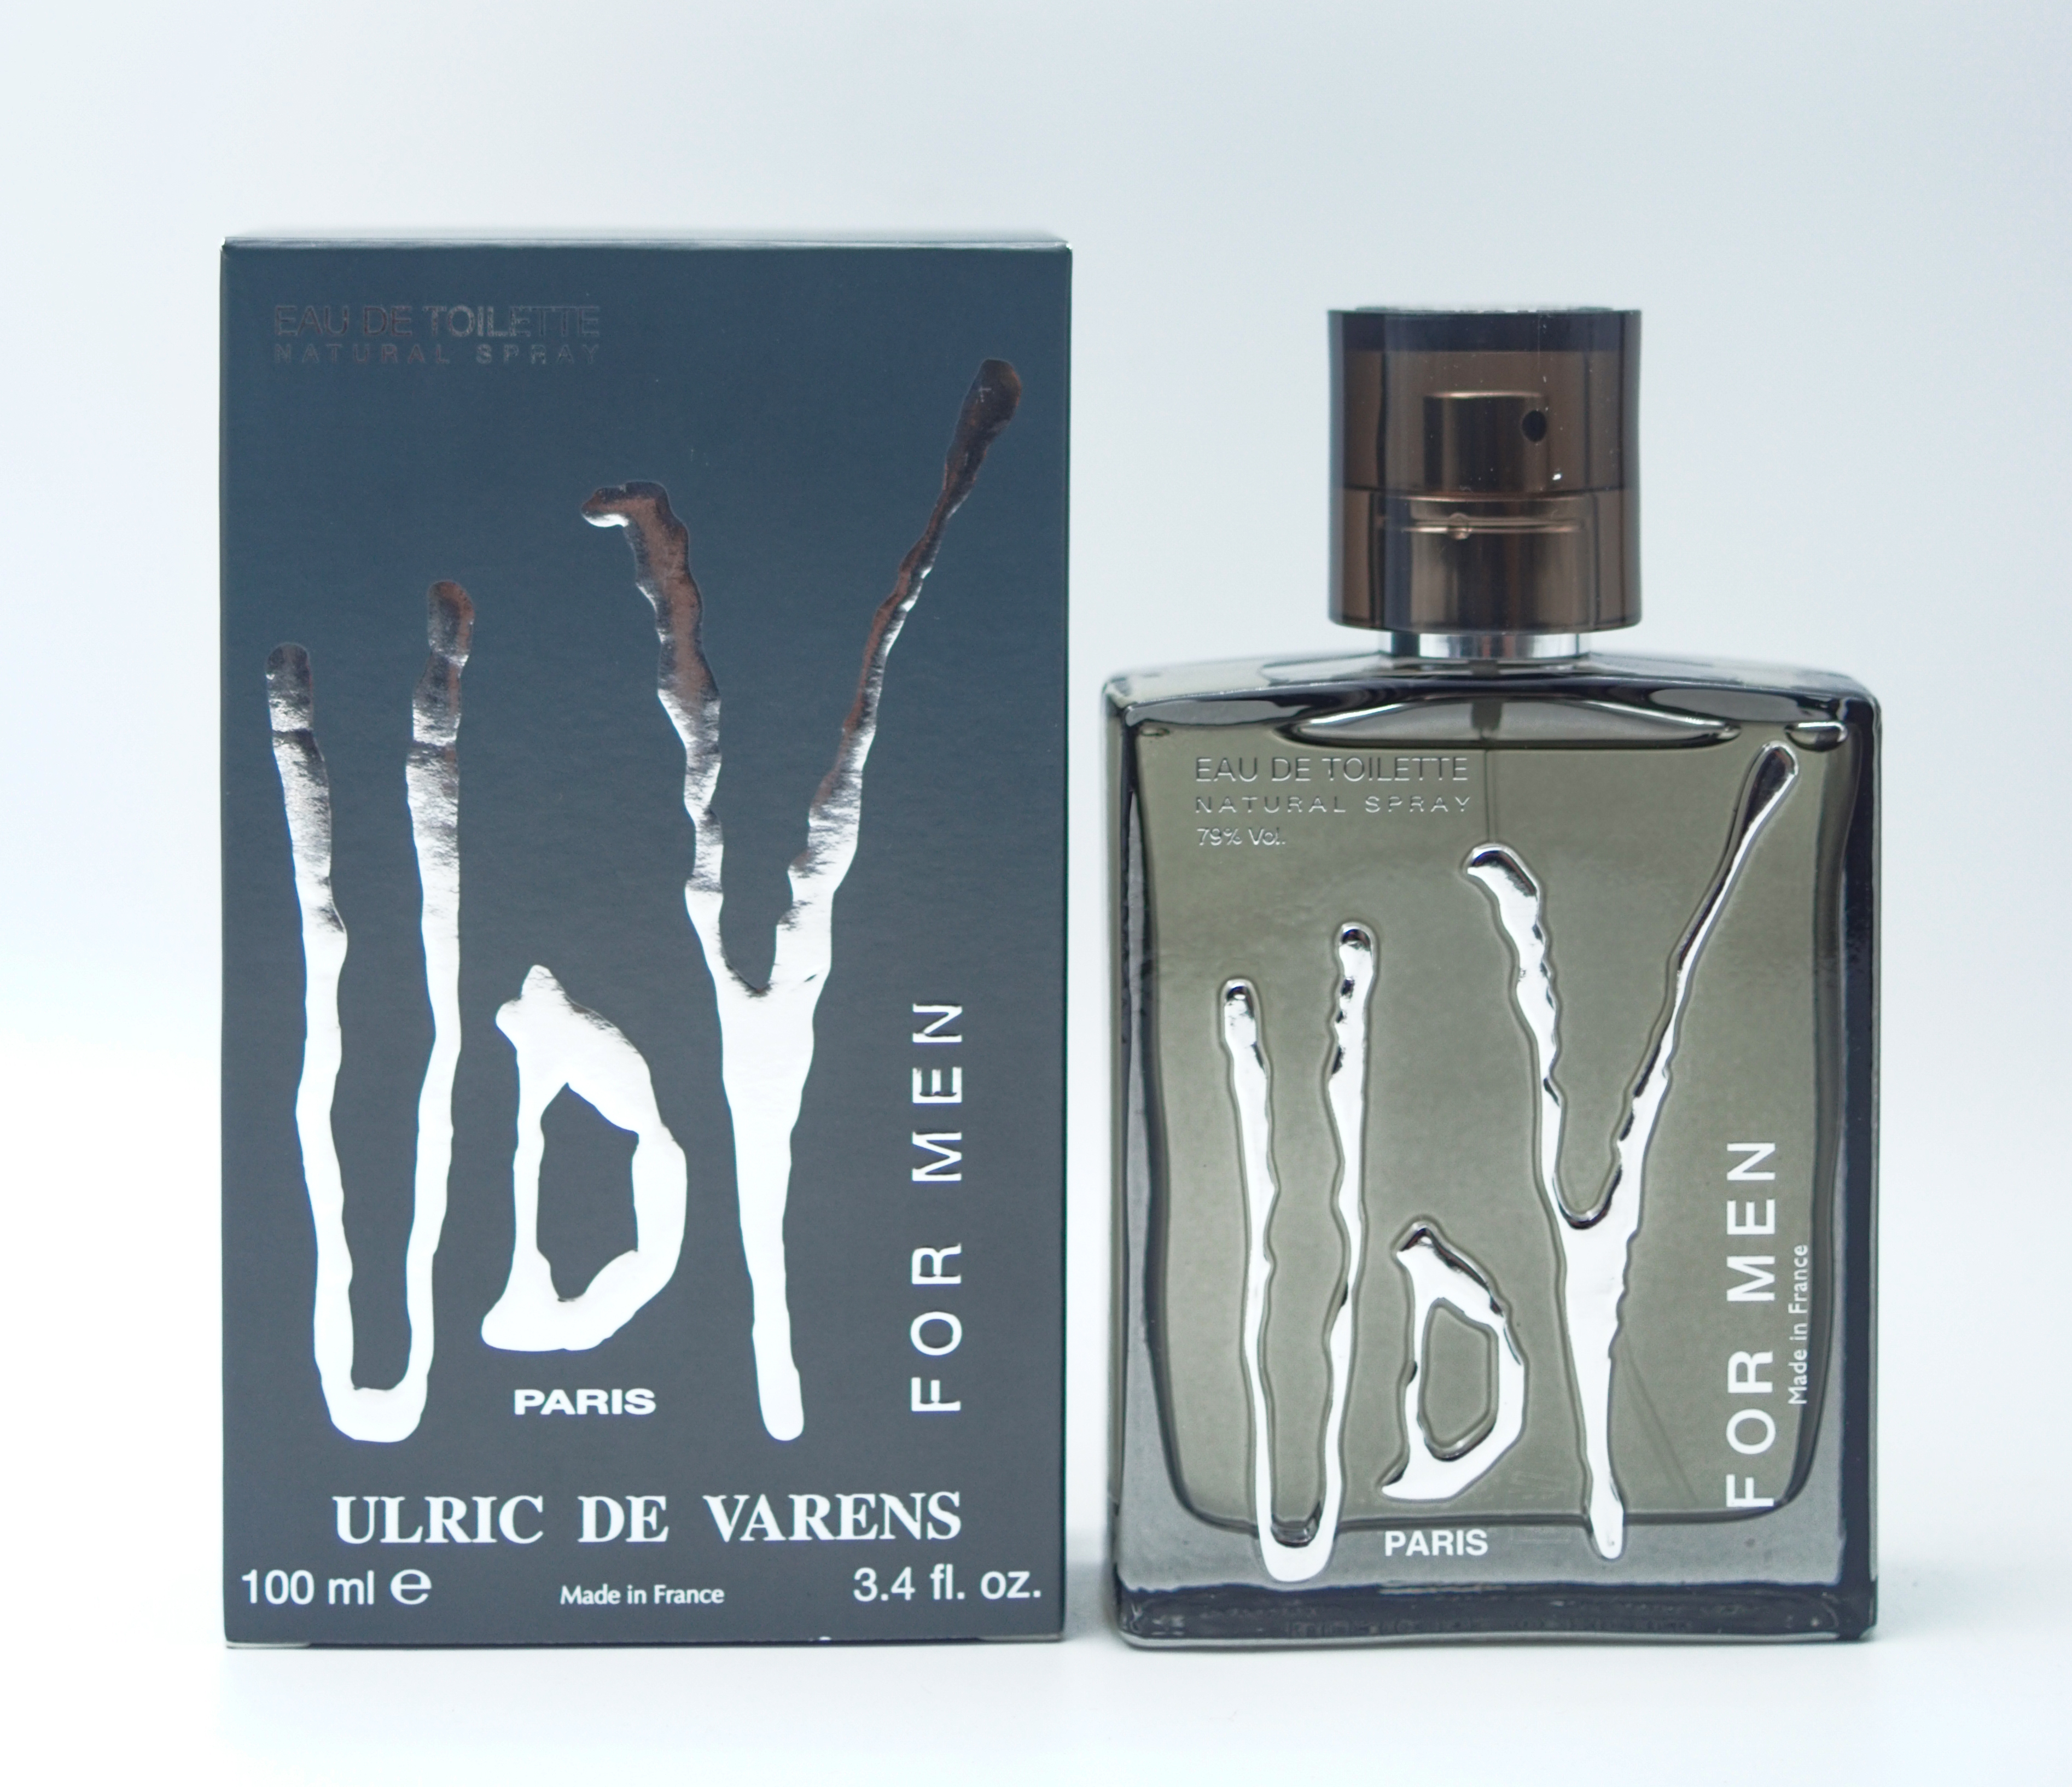 UDV Ulric De Varens 100 ml Eau De Toilette Natural Spray  Perfume For Men SKU 96822